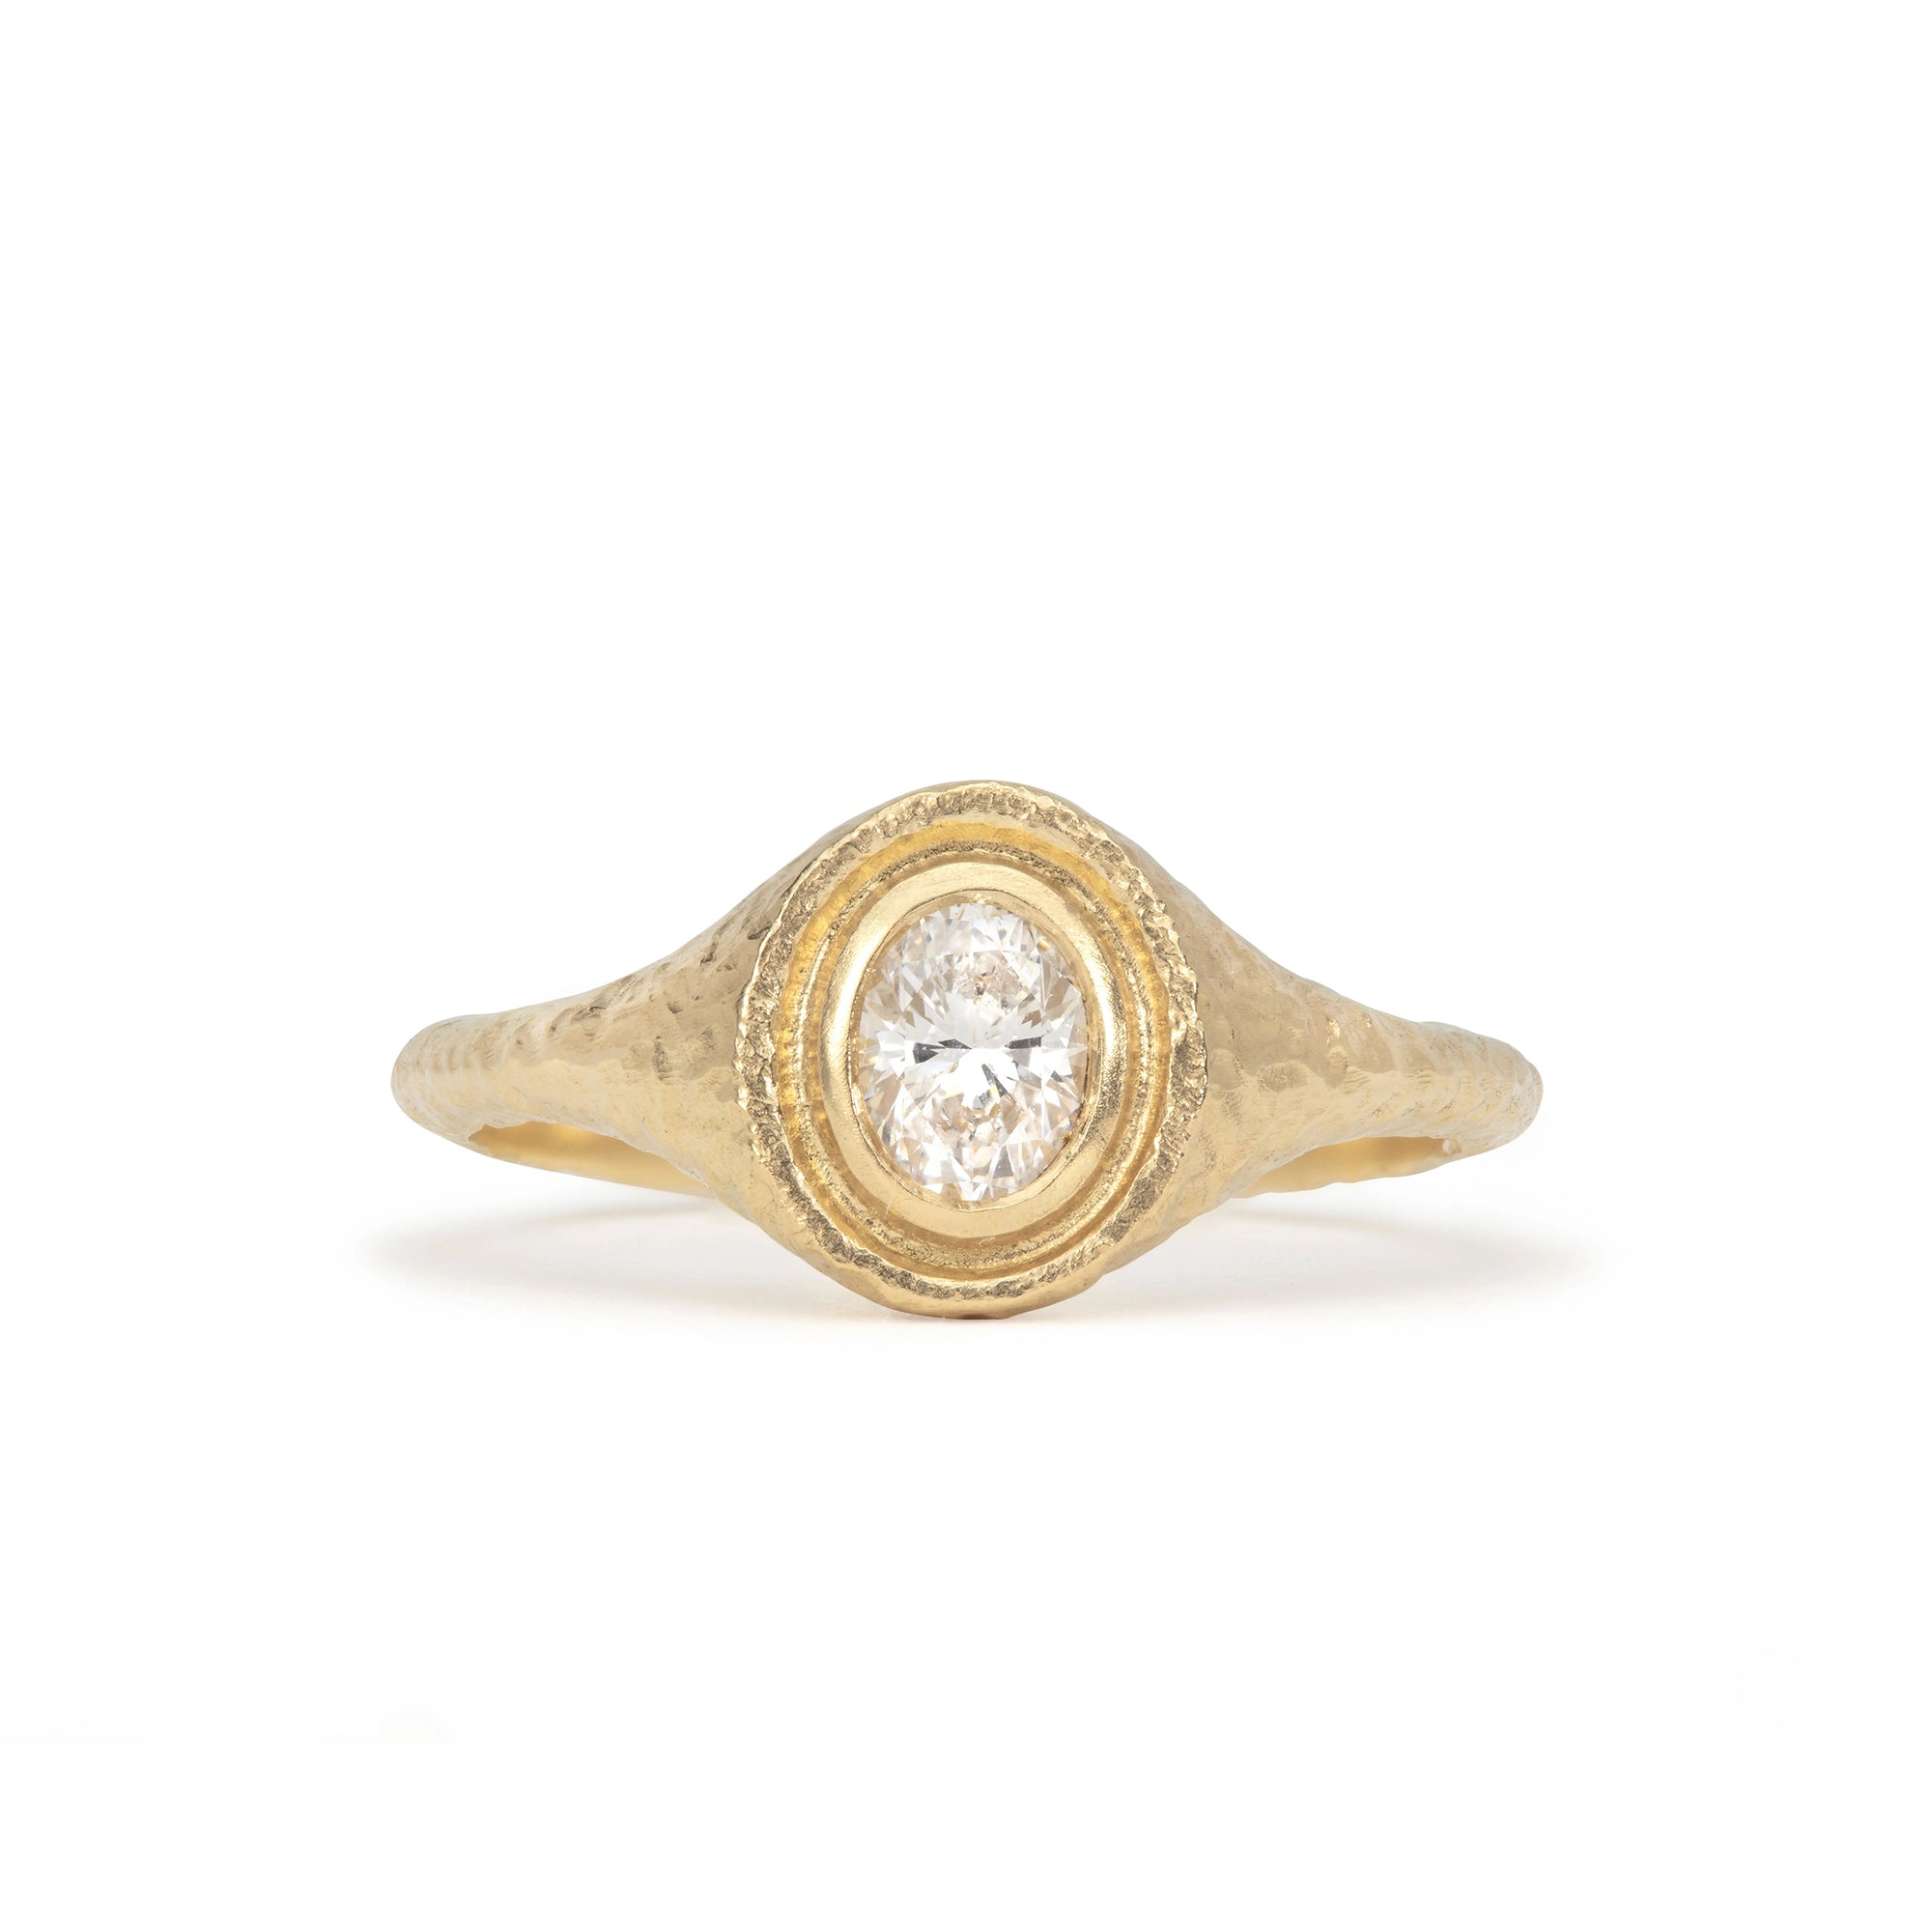    maya-selway-theres-plenty-diamond-signet-ring